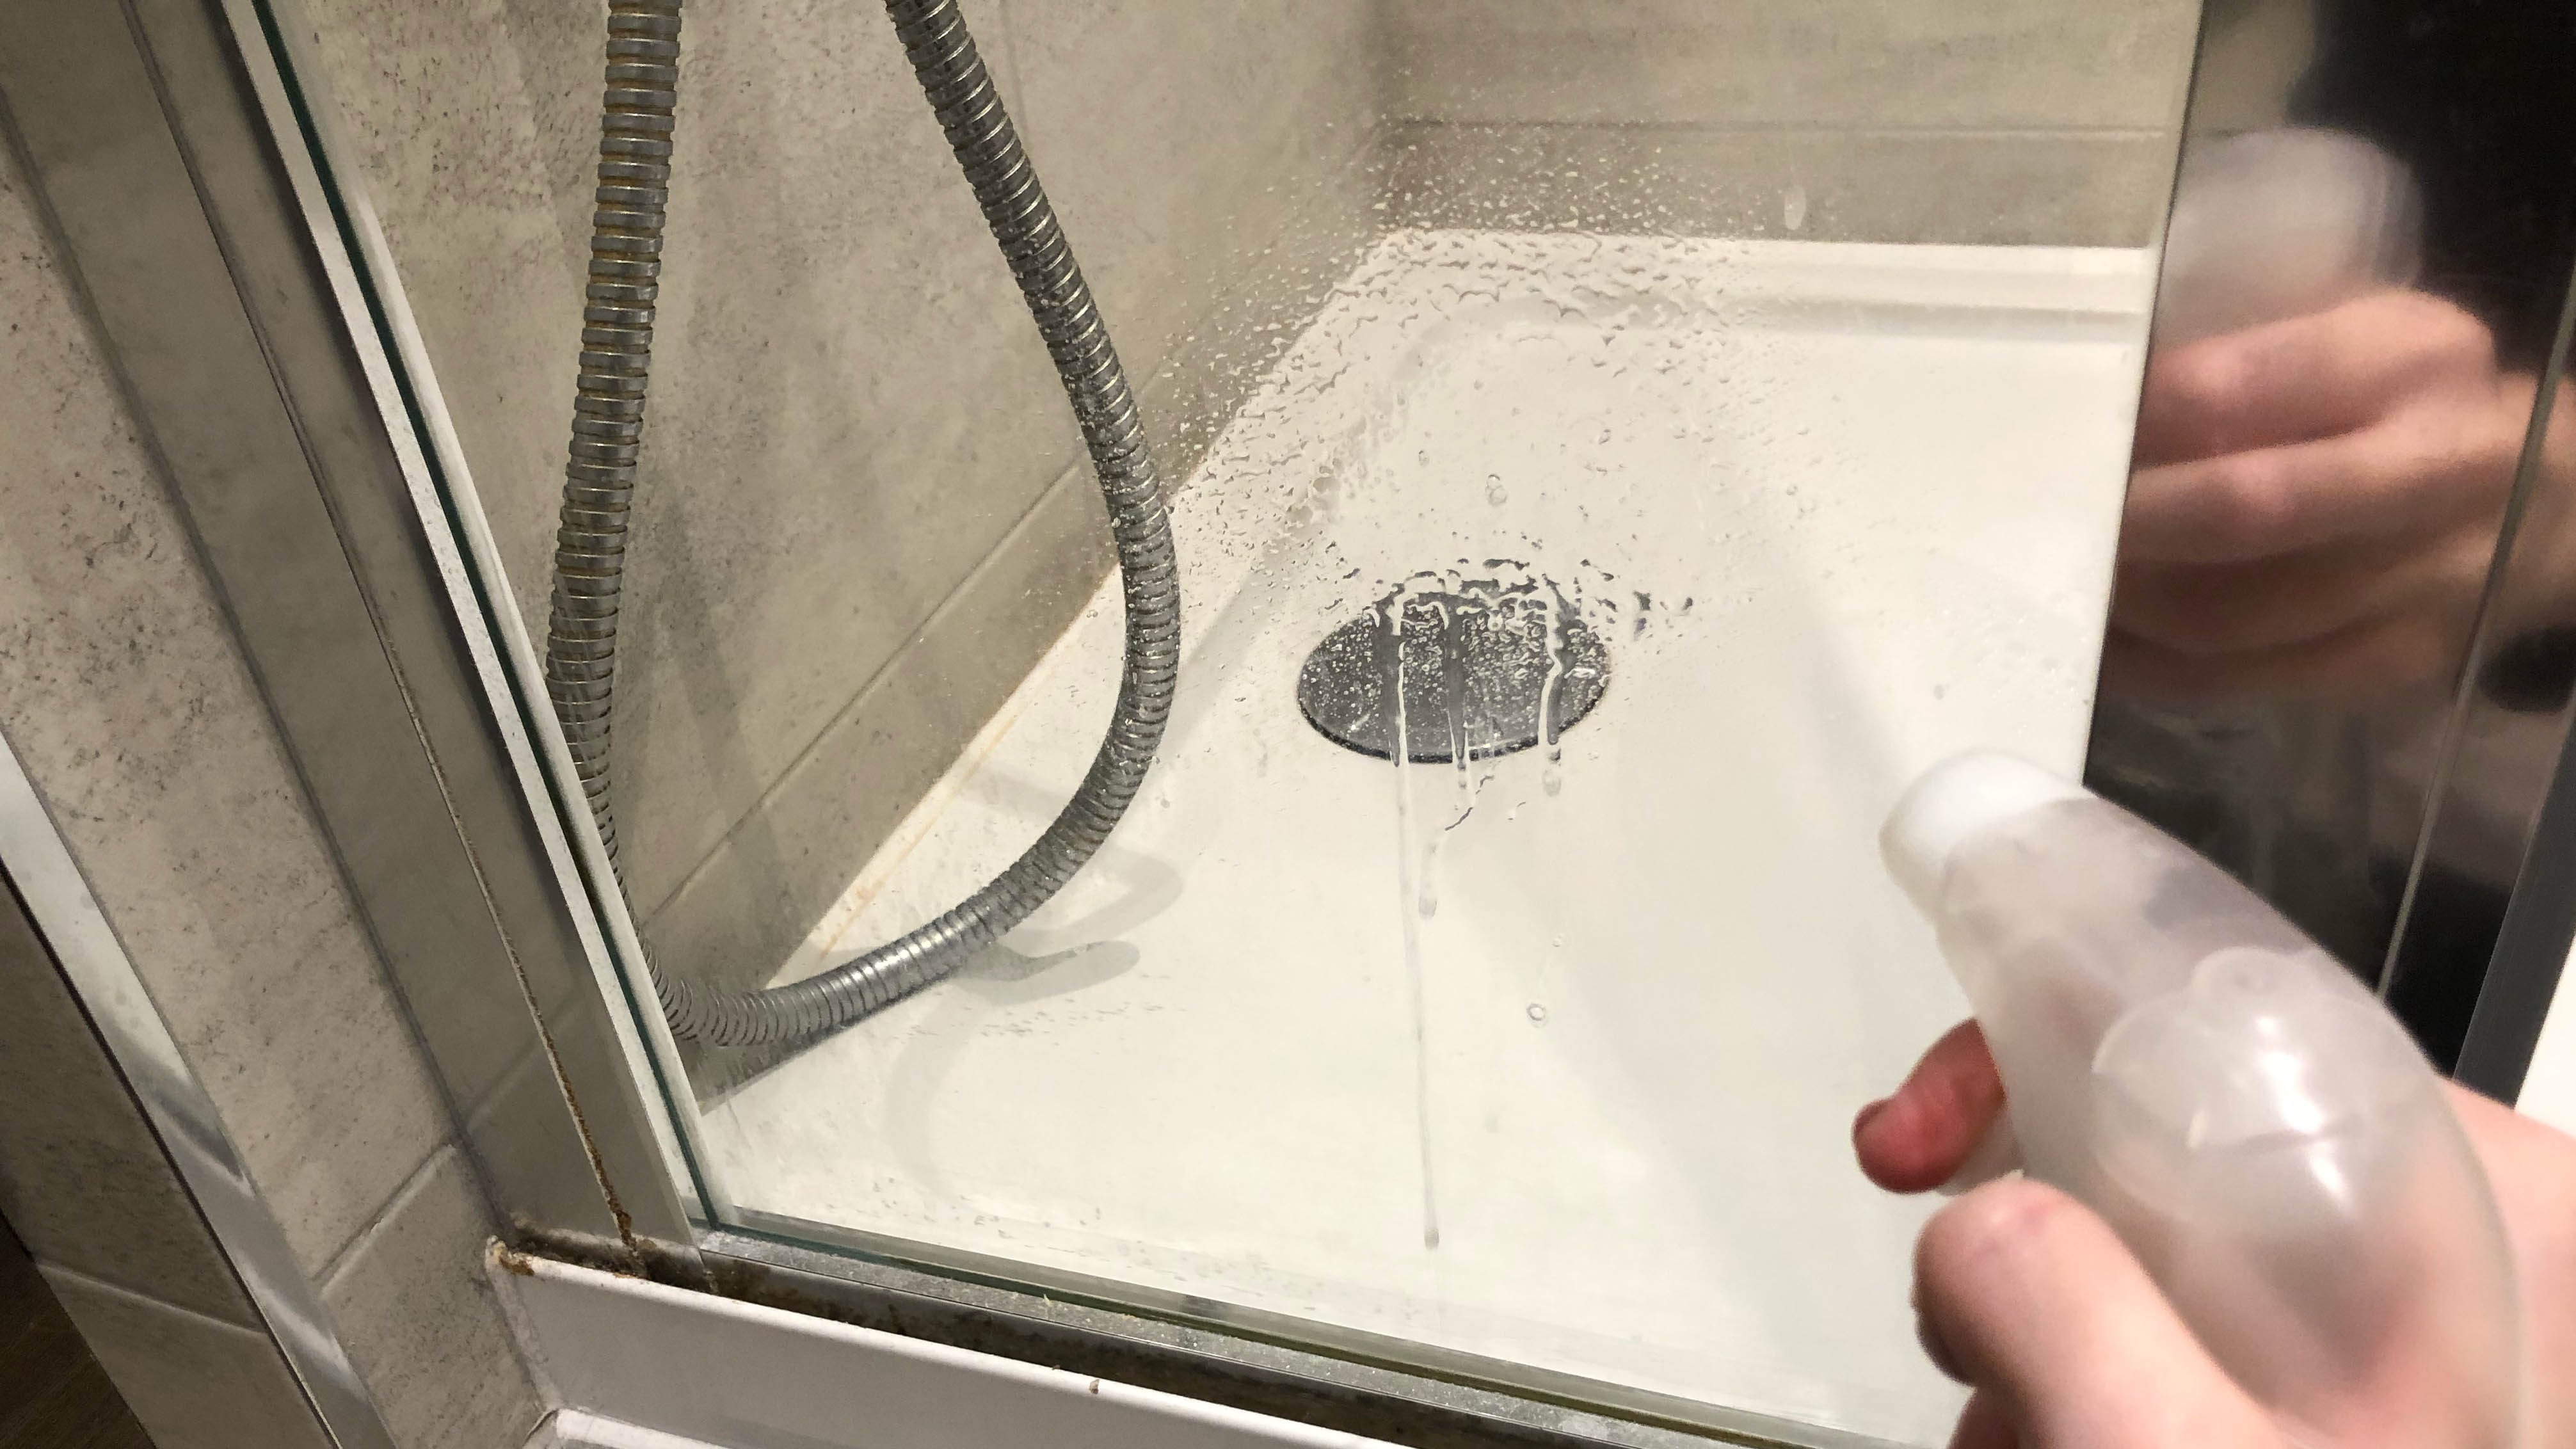 Someone sprays vinegar water on the shower glass panel